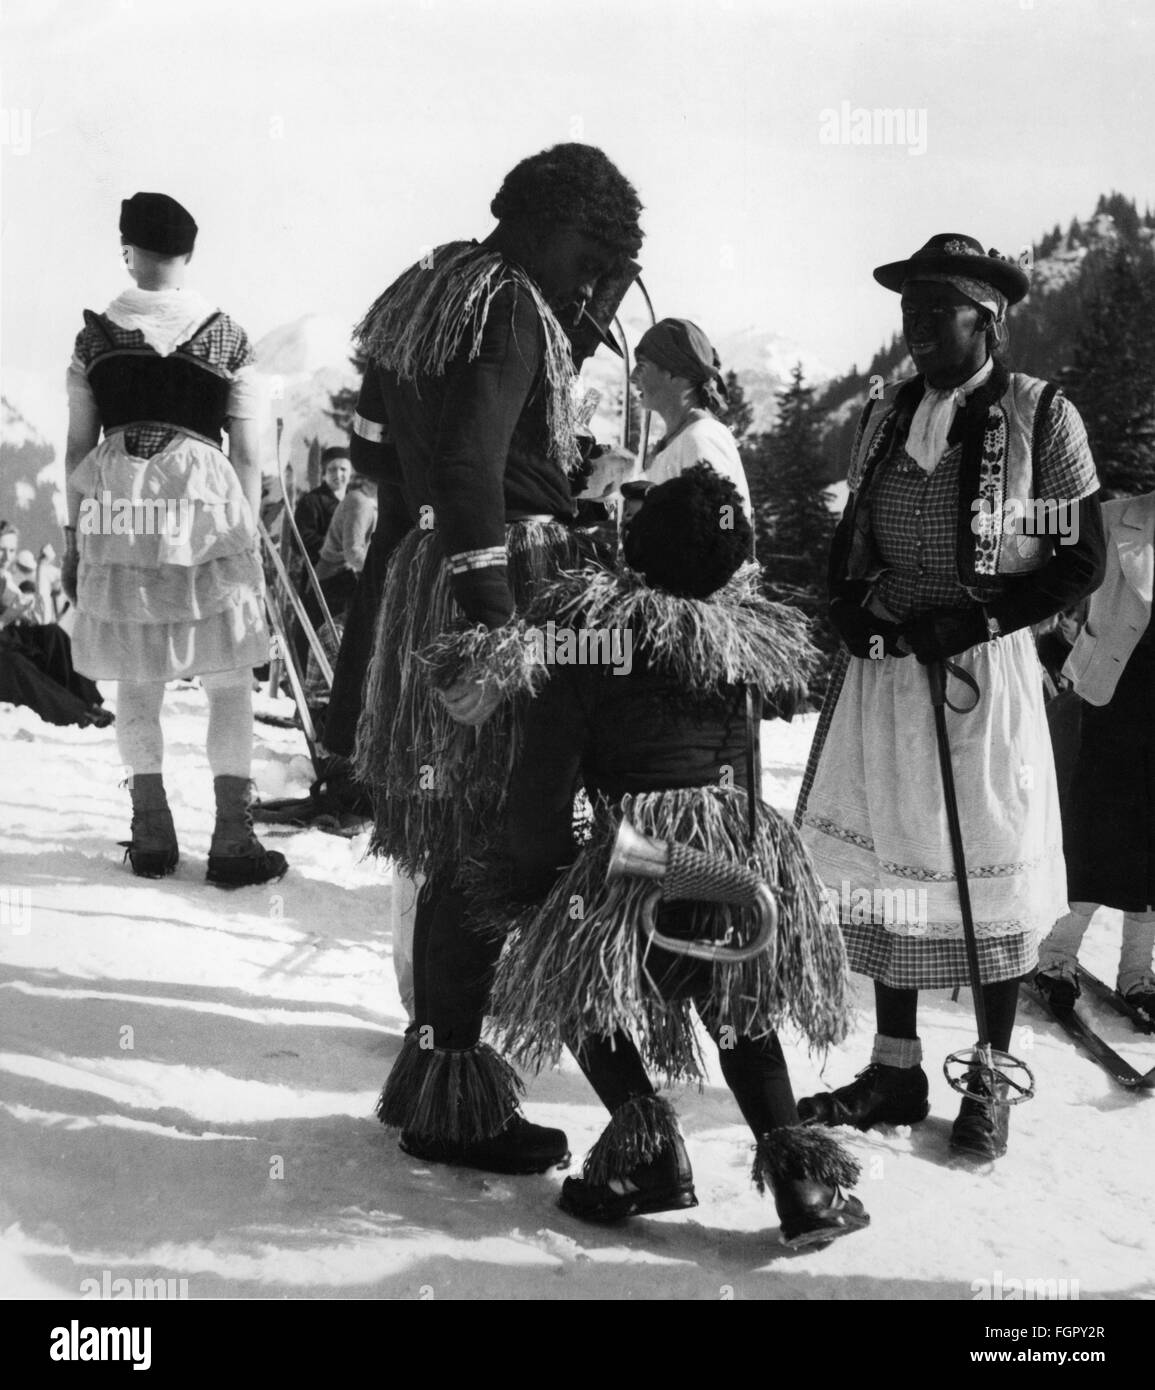 Feste, carnevale, carnevale sugli sci, famiglia vestita come africani neri, Firstalm, Schliersee, 1938, Additional-Rights-Clearences-Not Available Foto Stock